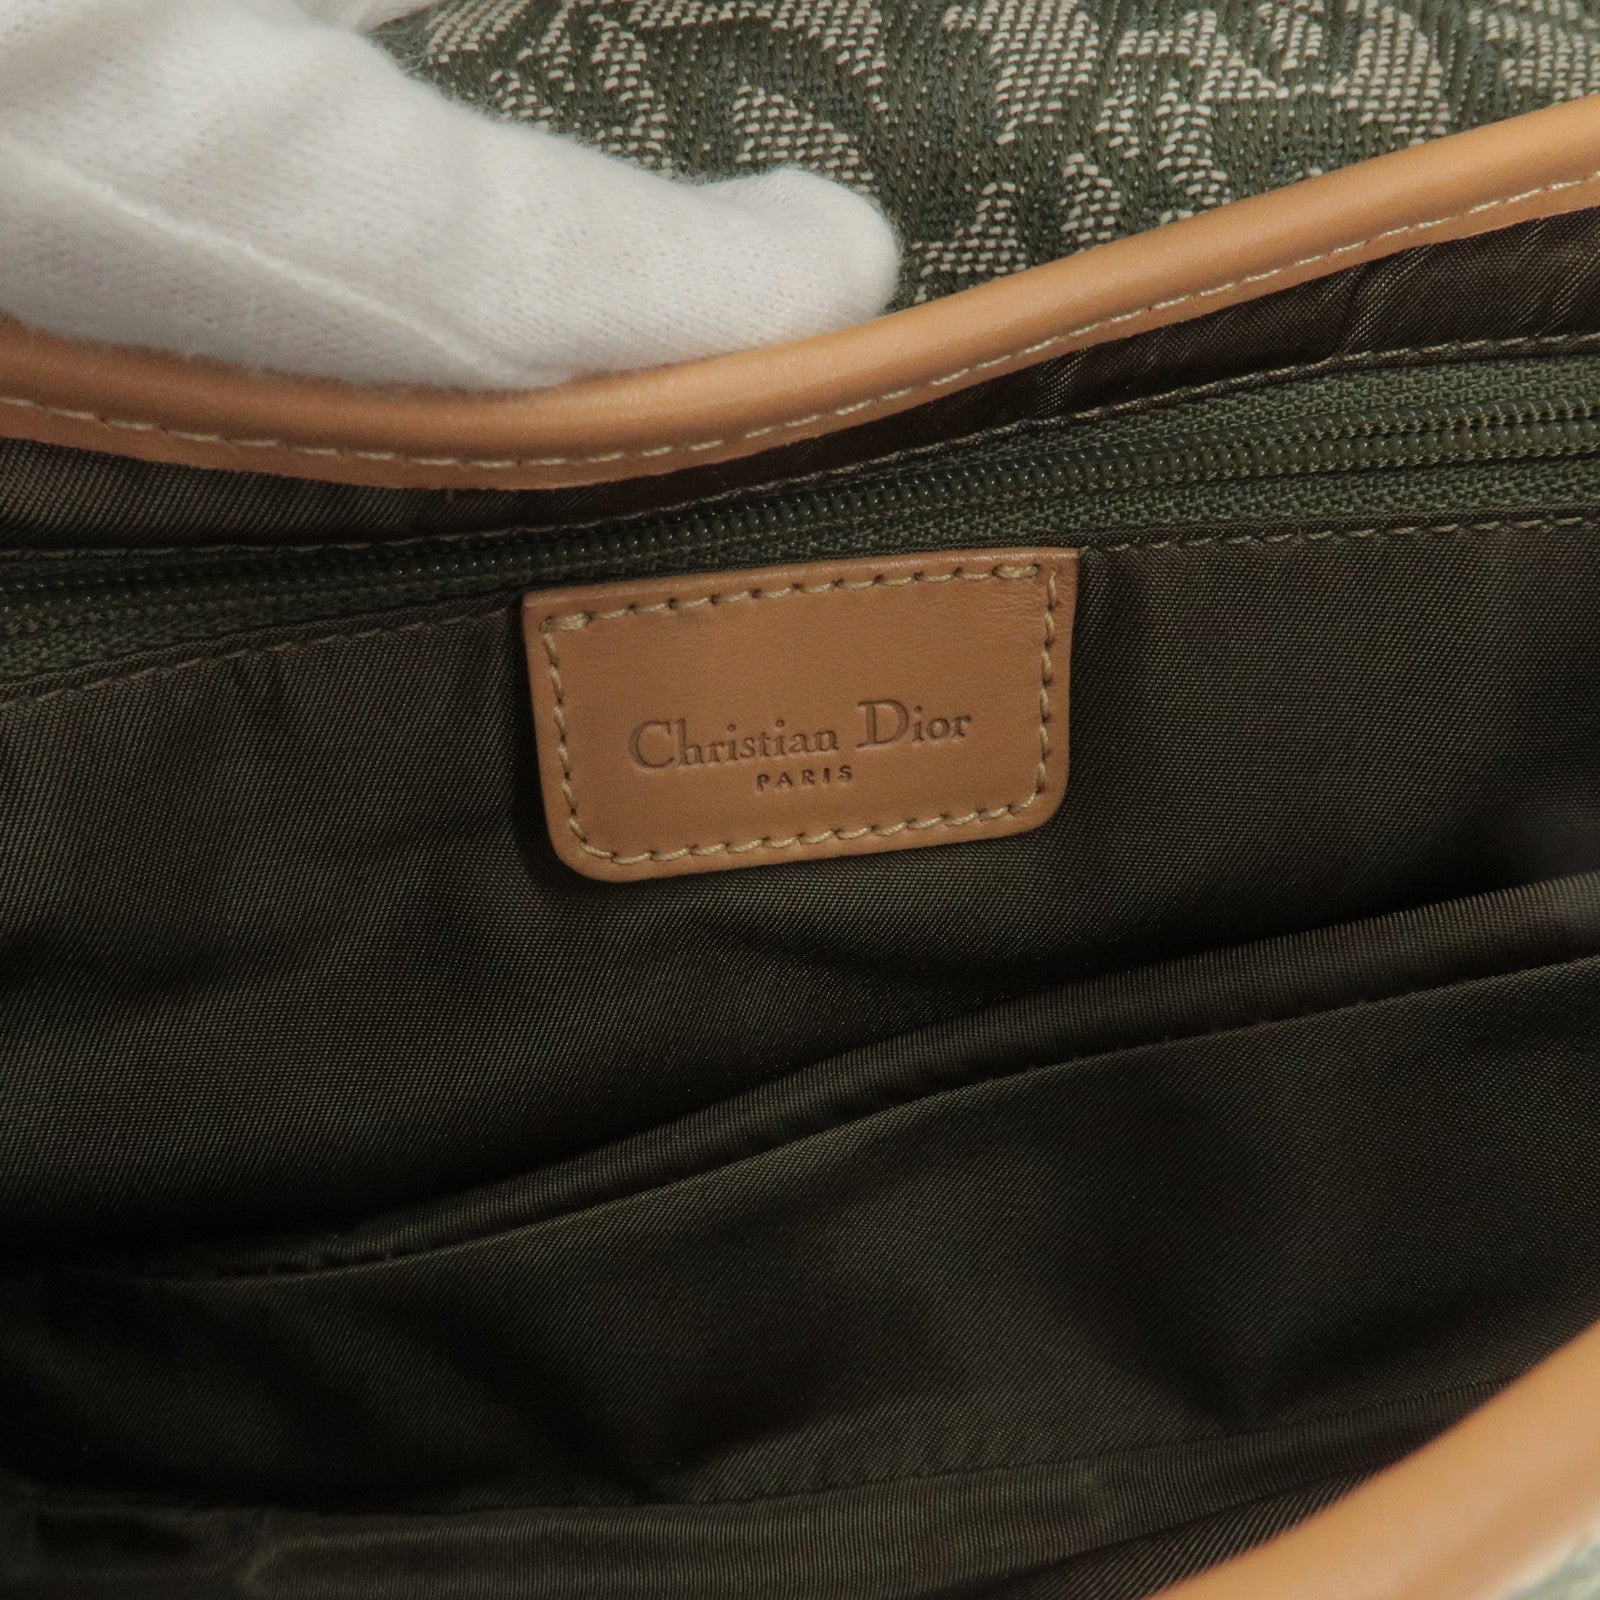 Saddle - Trotter - Green – Geantă COCCINELLE LV3 Mini Bag E5 LV3 55 F4 07  Silk Y87 - Christian - Dior - Tory Burch Kira Chevron-Exotic Convertible  shoulder bag - Canvas - Bag - Leather